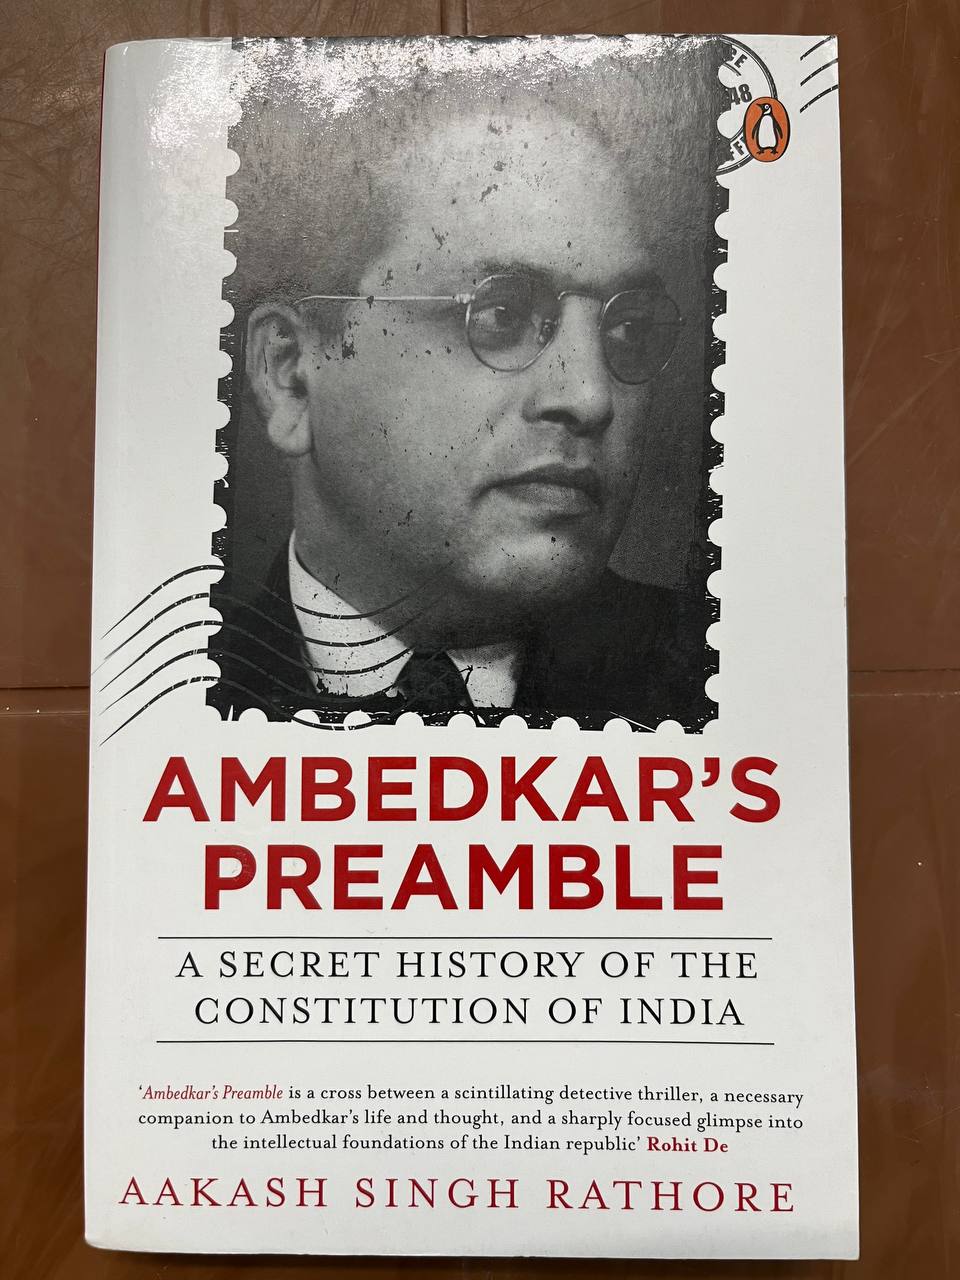 Ambedkar's Preamble